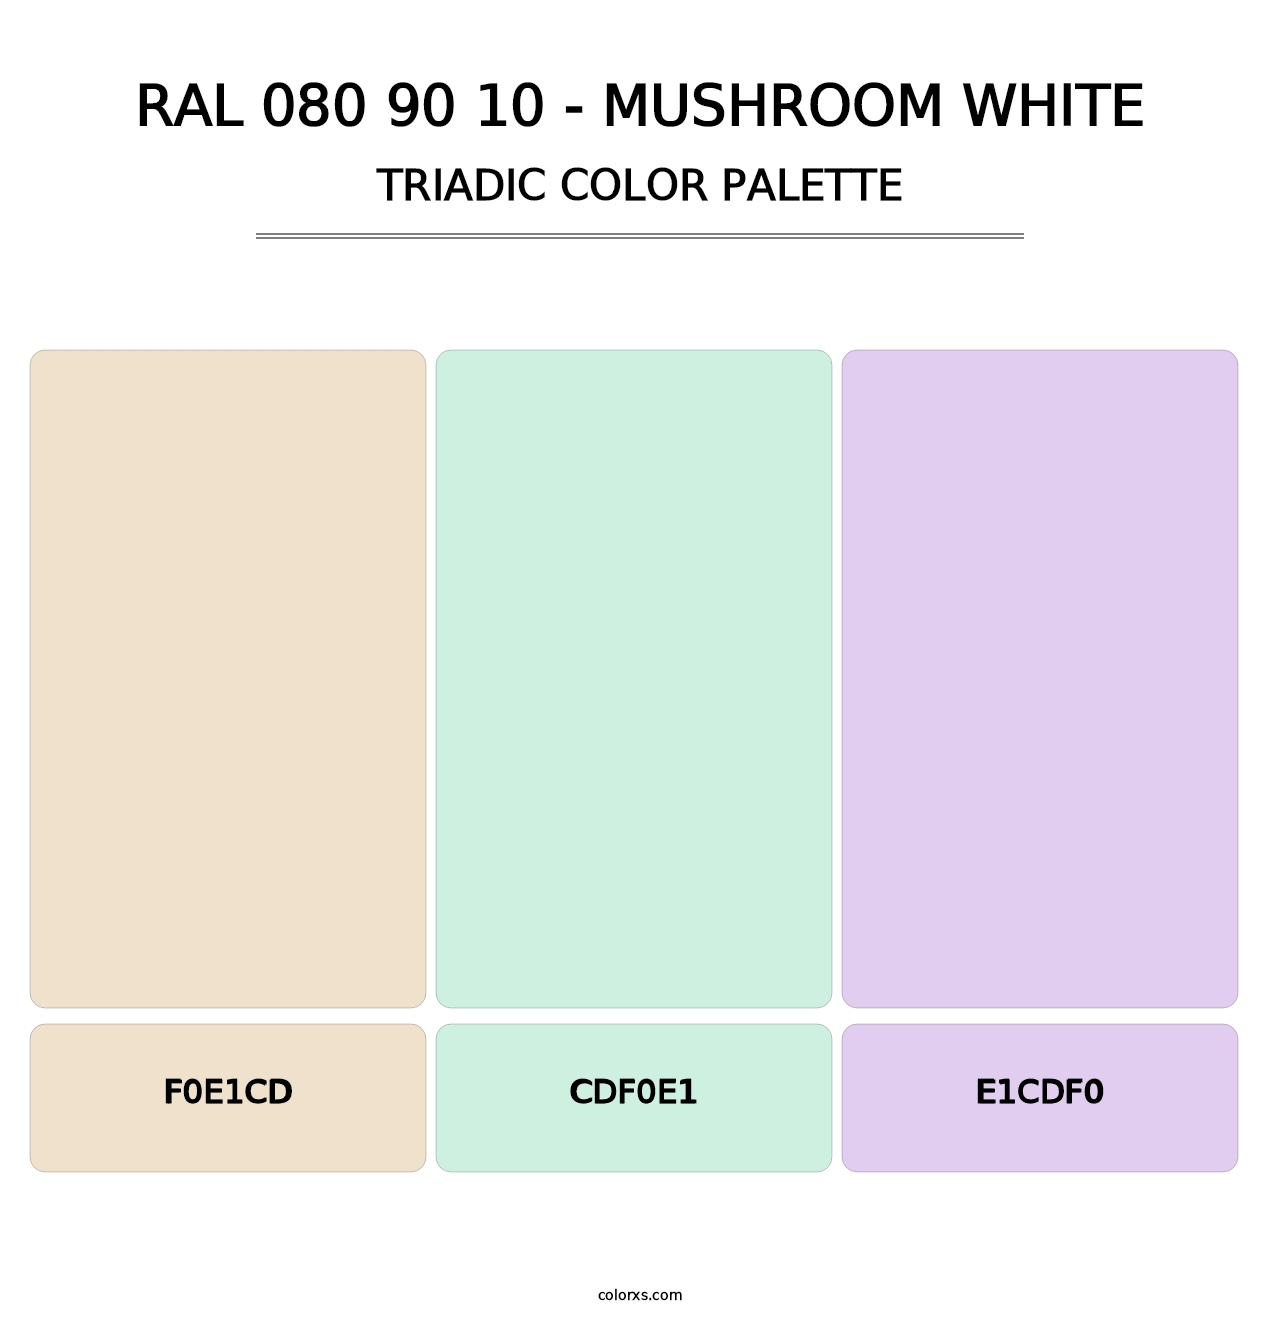 RAL 080 90 10 - Mushroom White - Triadic Color Palette